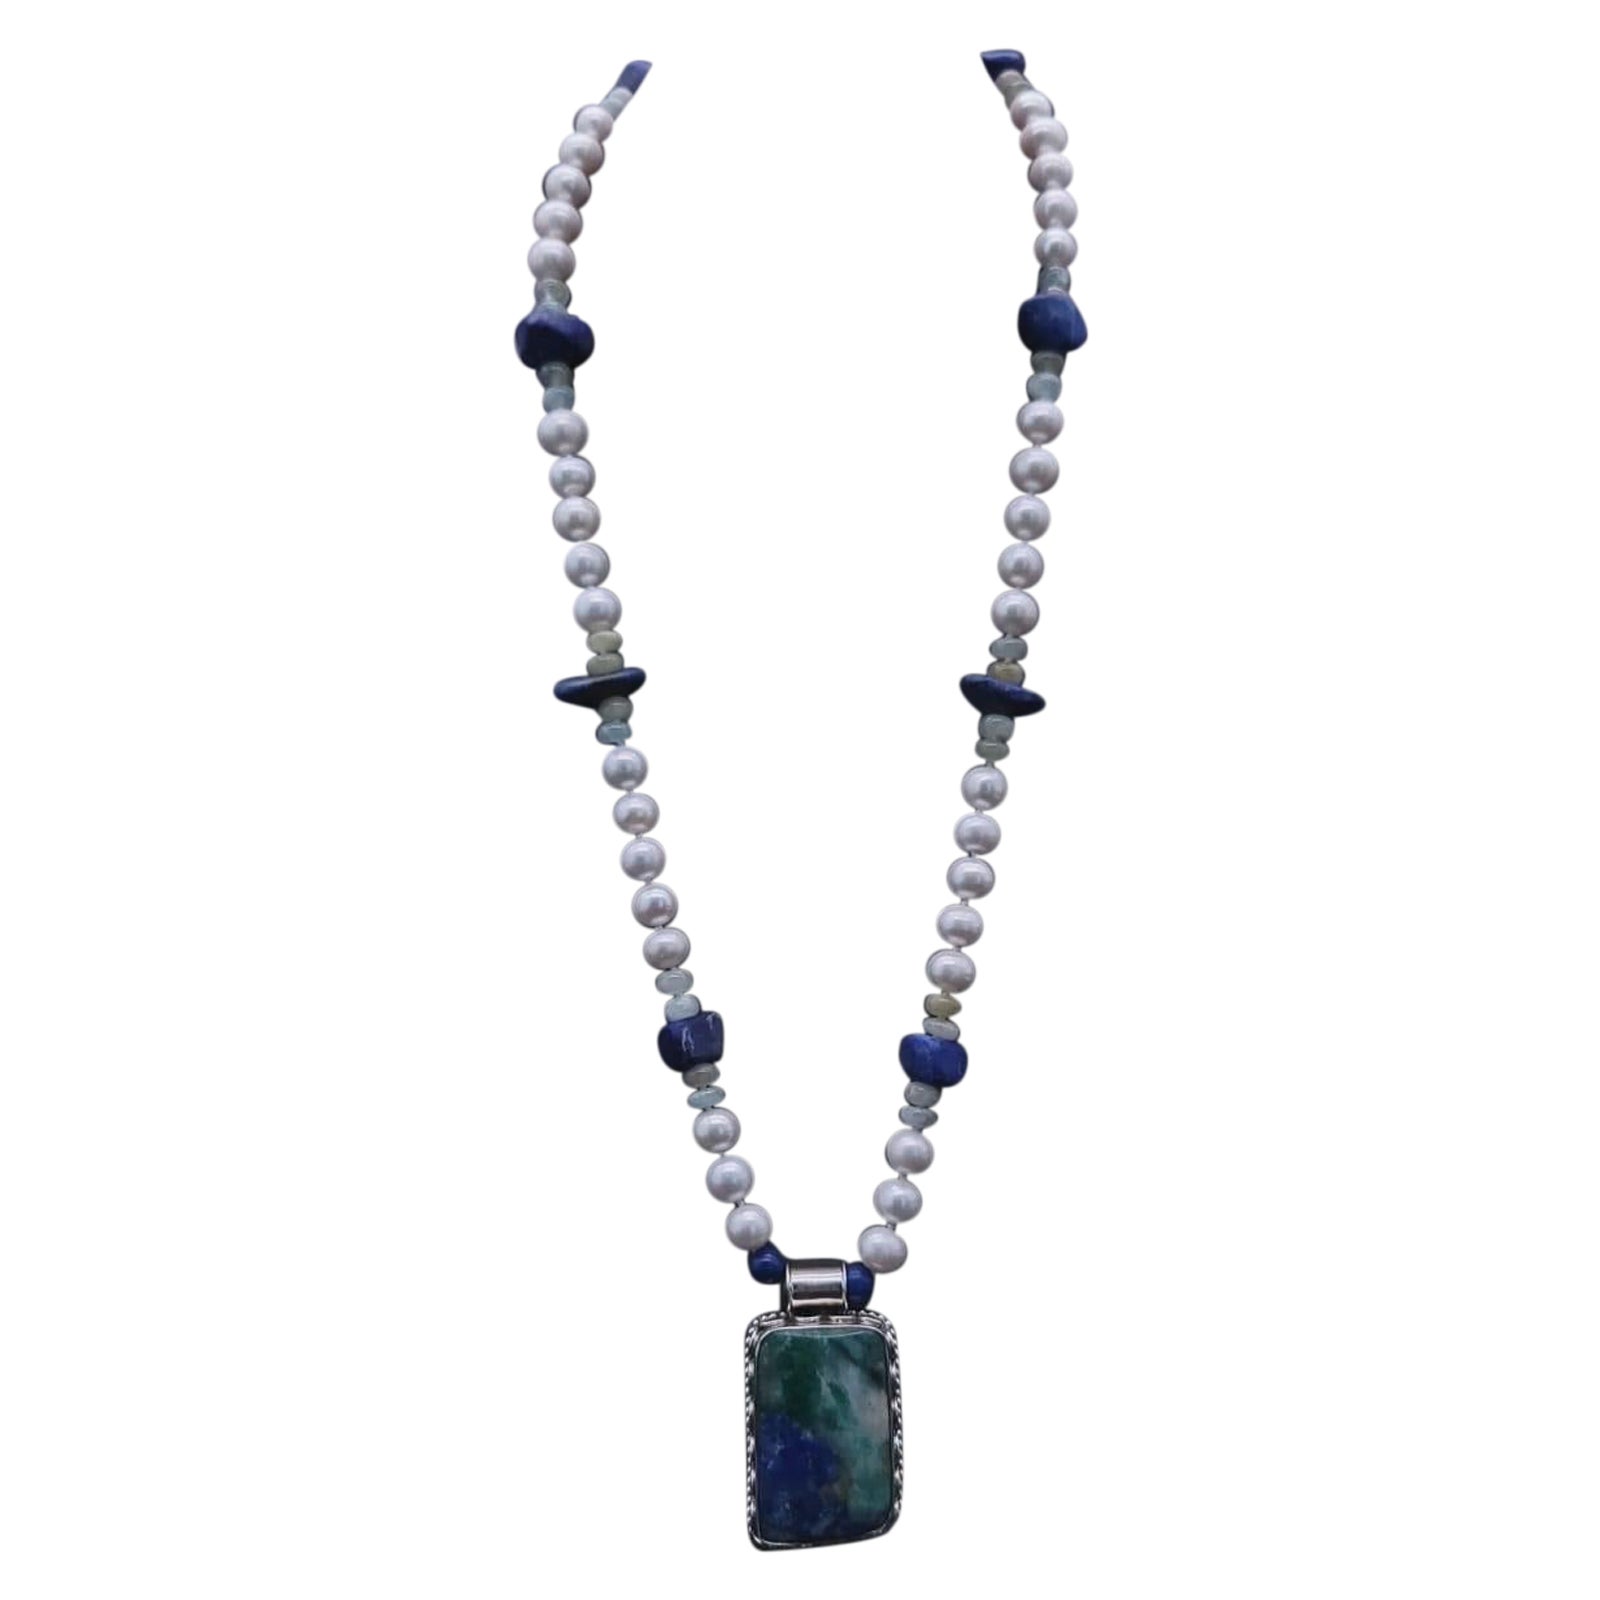 A.Jeschel Stunning Chrysocolla pendant necklace